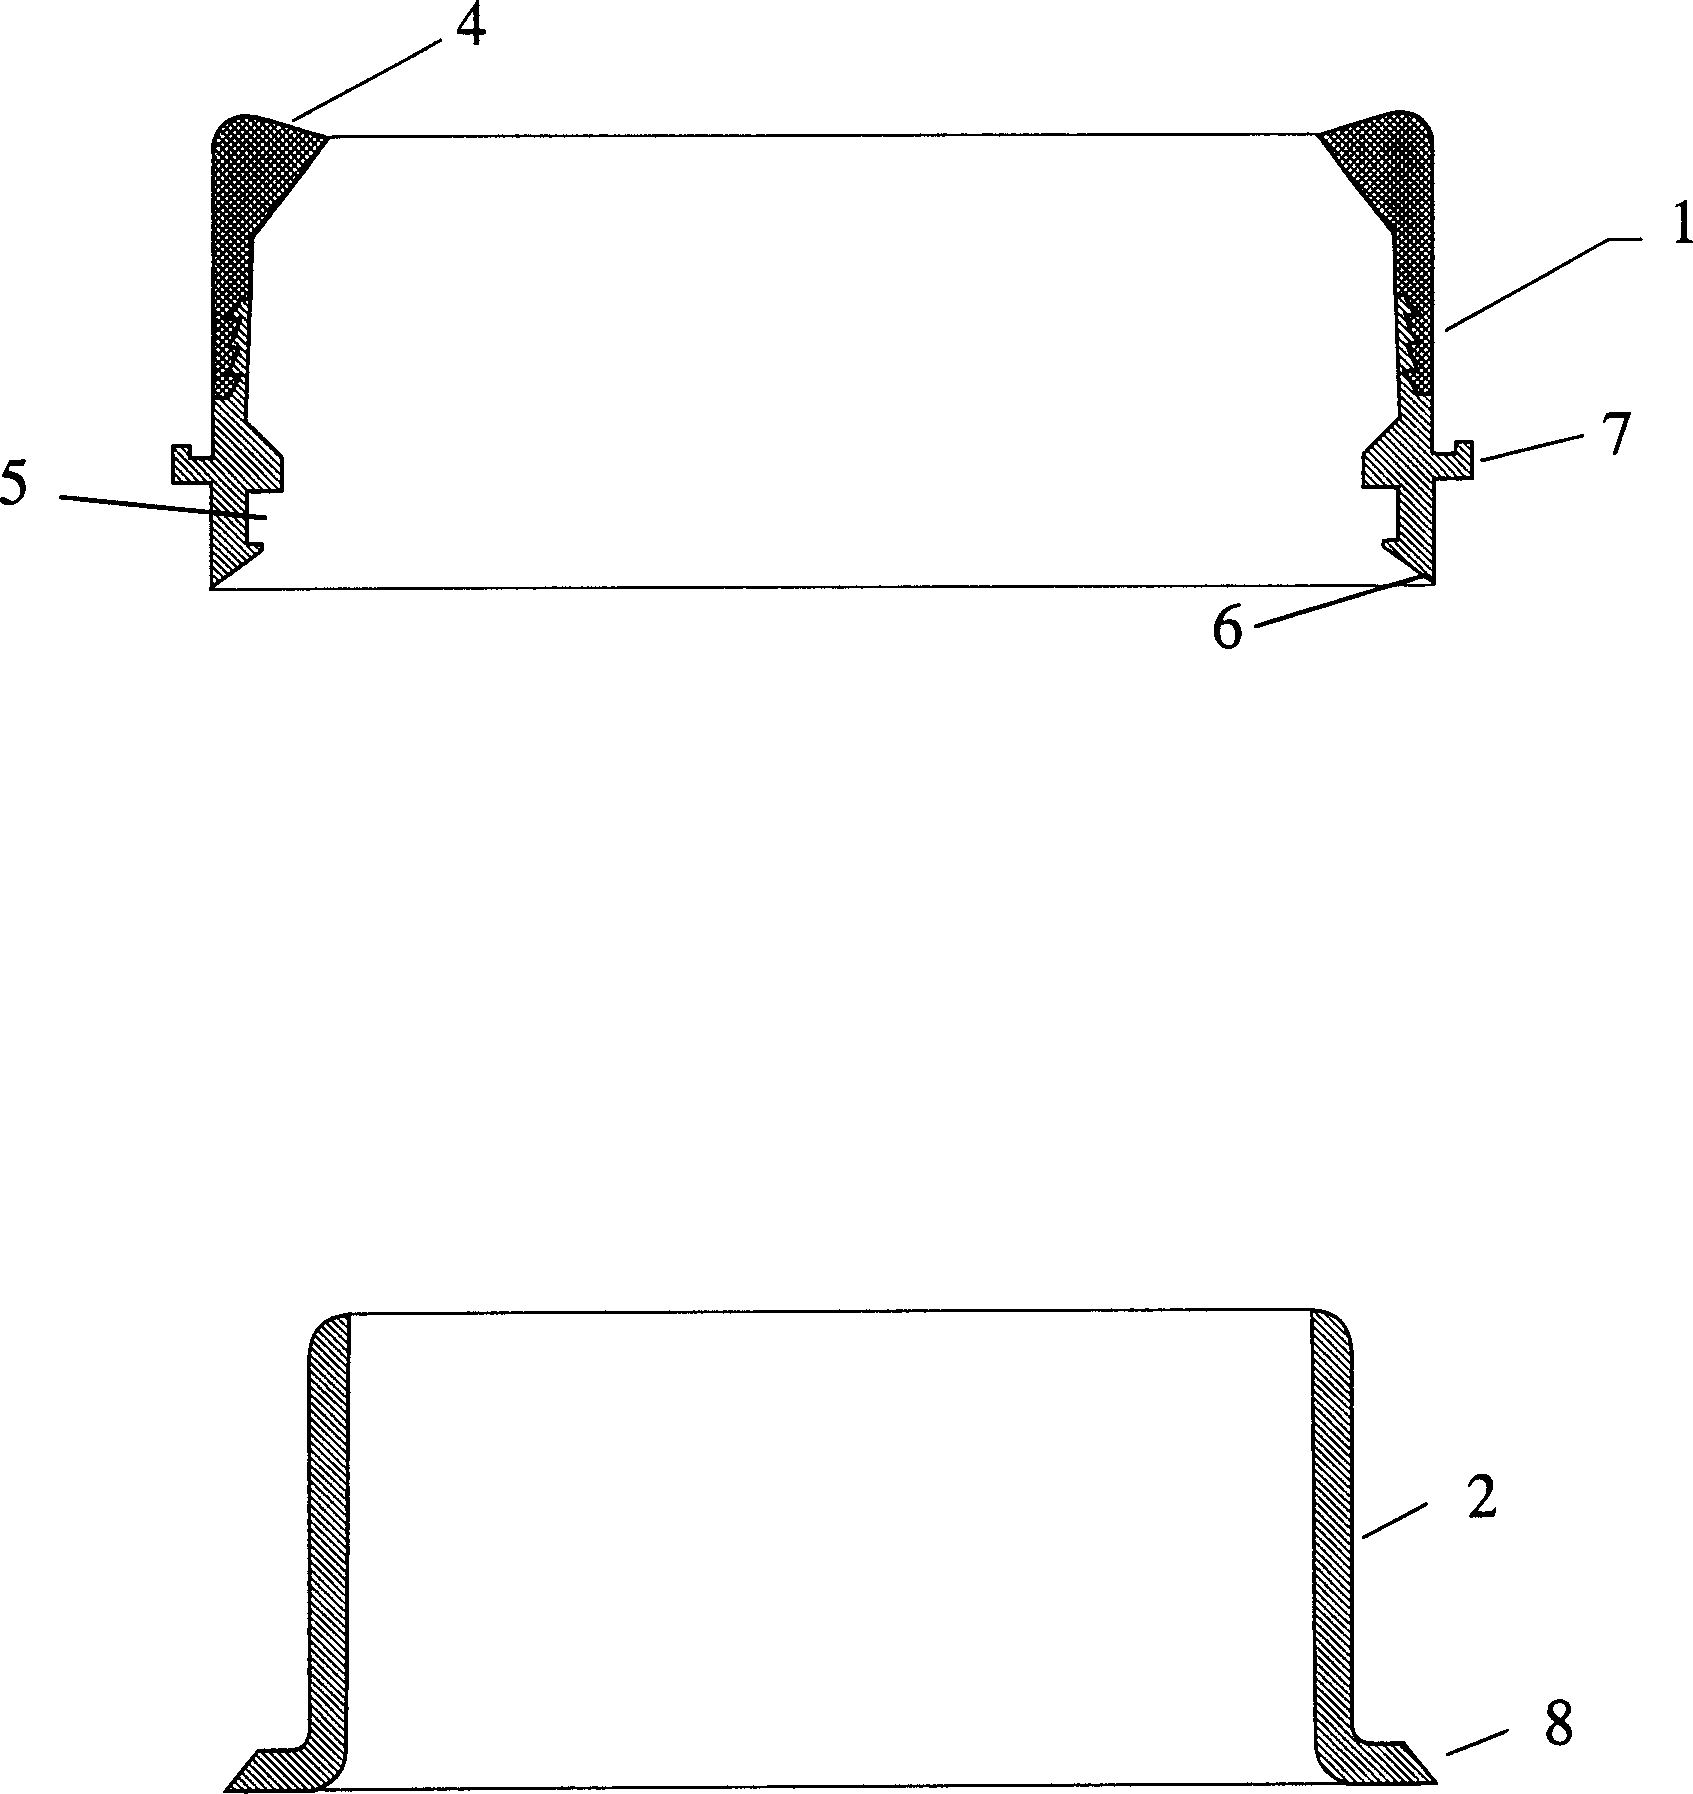 Double ring type prepuce circular cutting apparatus